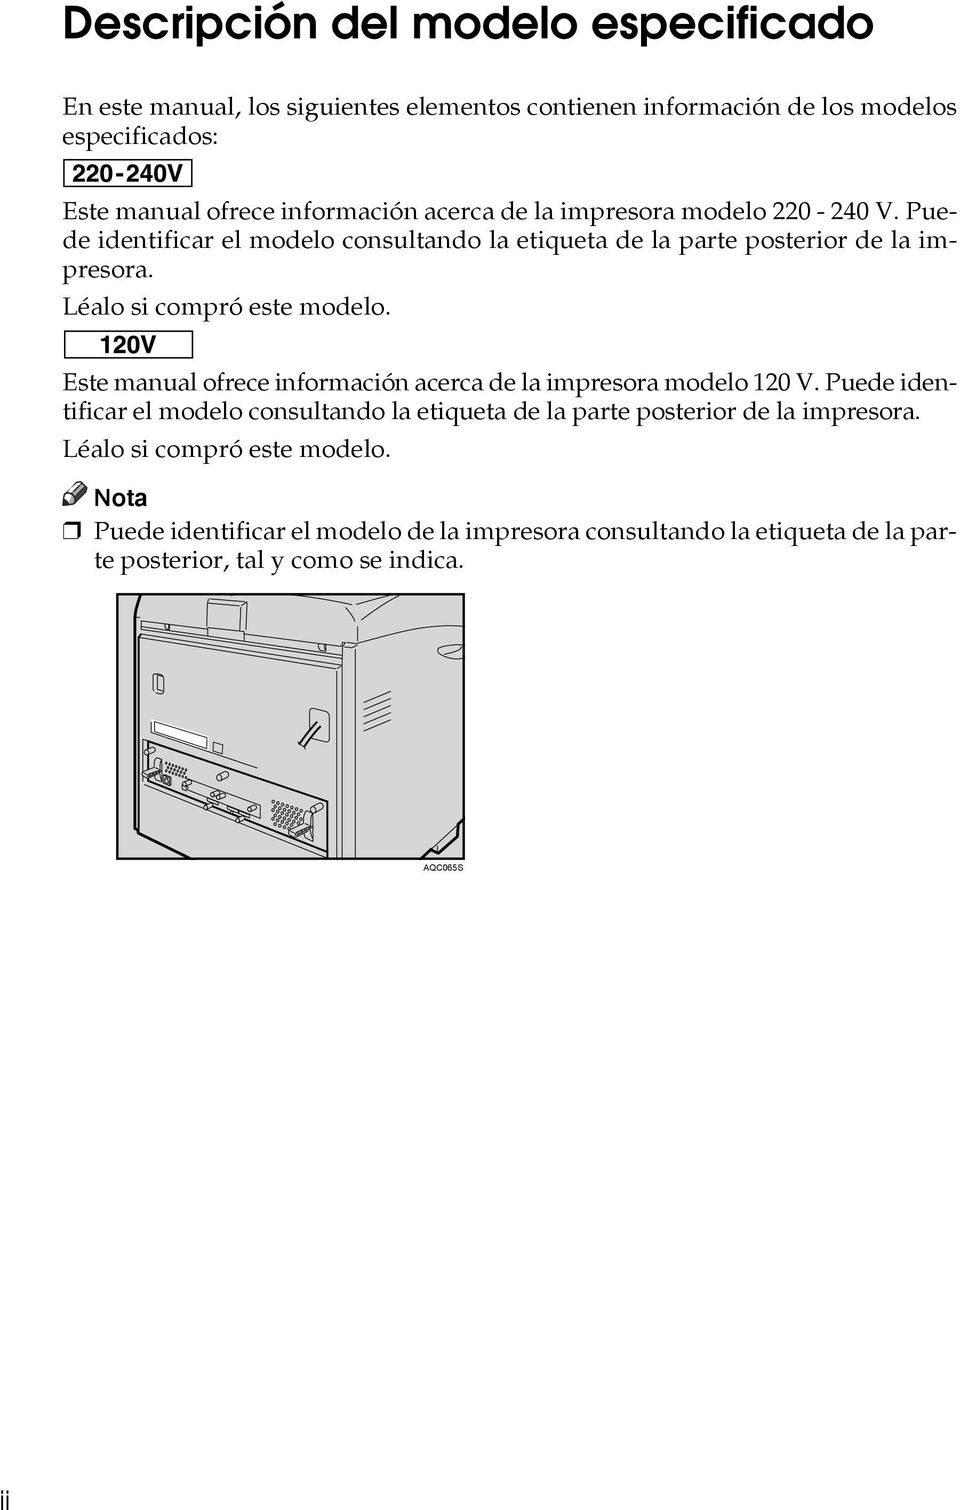 Léalo si compró este modelo. Este manual ofrece información acerca de la impresora modelo 120 V.